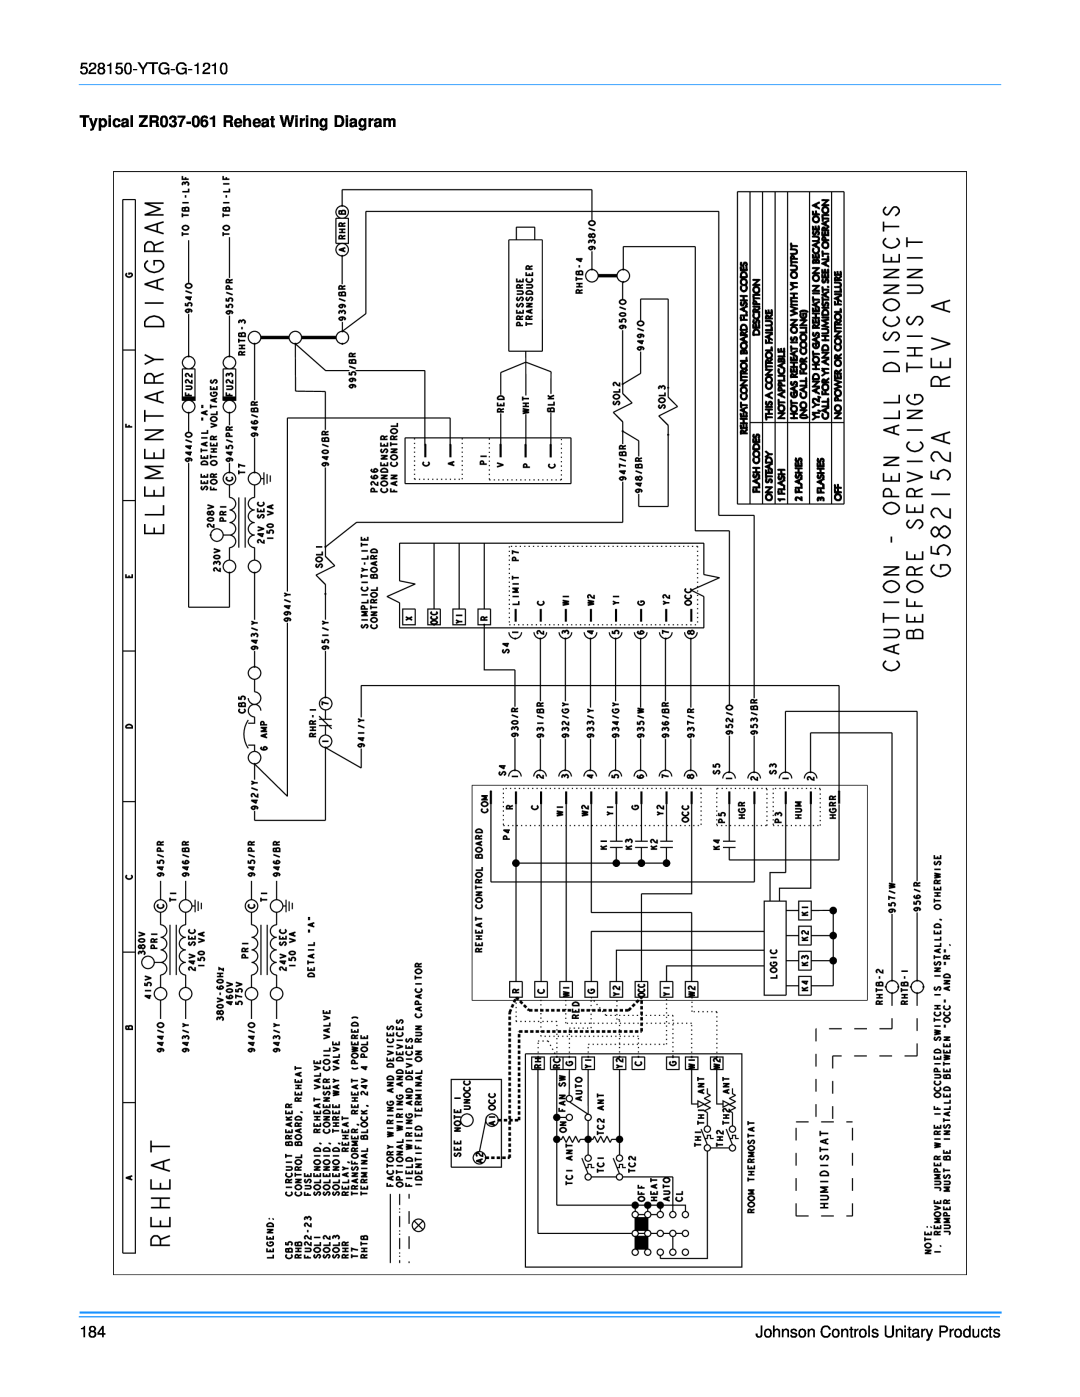 York R-410A ZH/ZJ/ZR Series manual Typical ZR037-061Reheat Wiring Diagram, Johnson Controls Unitary Products 